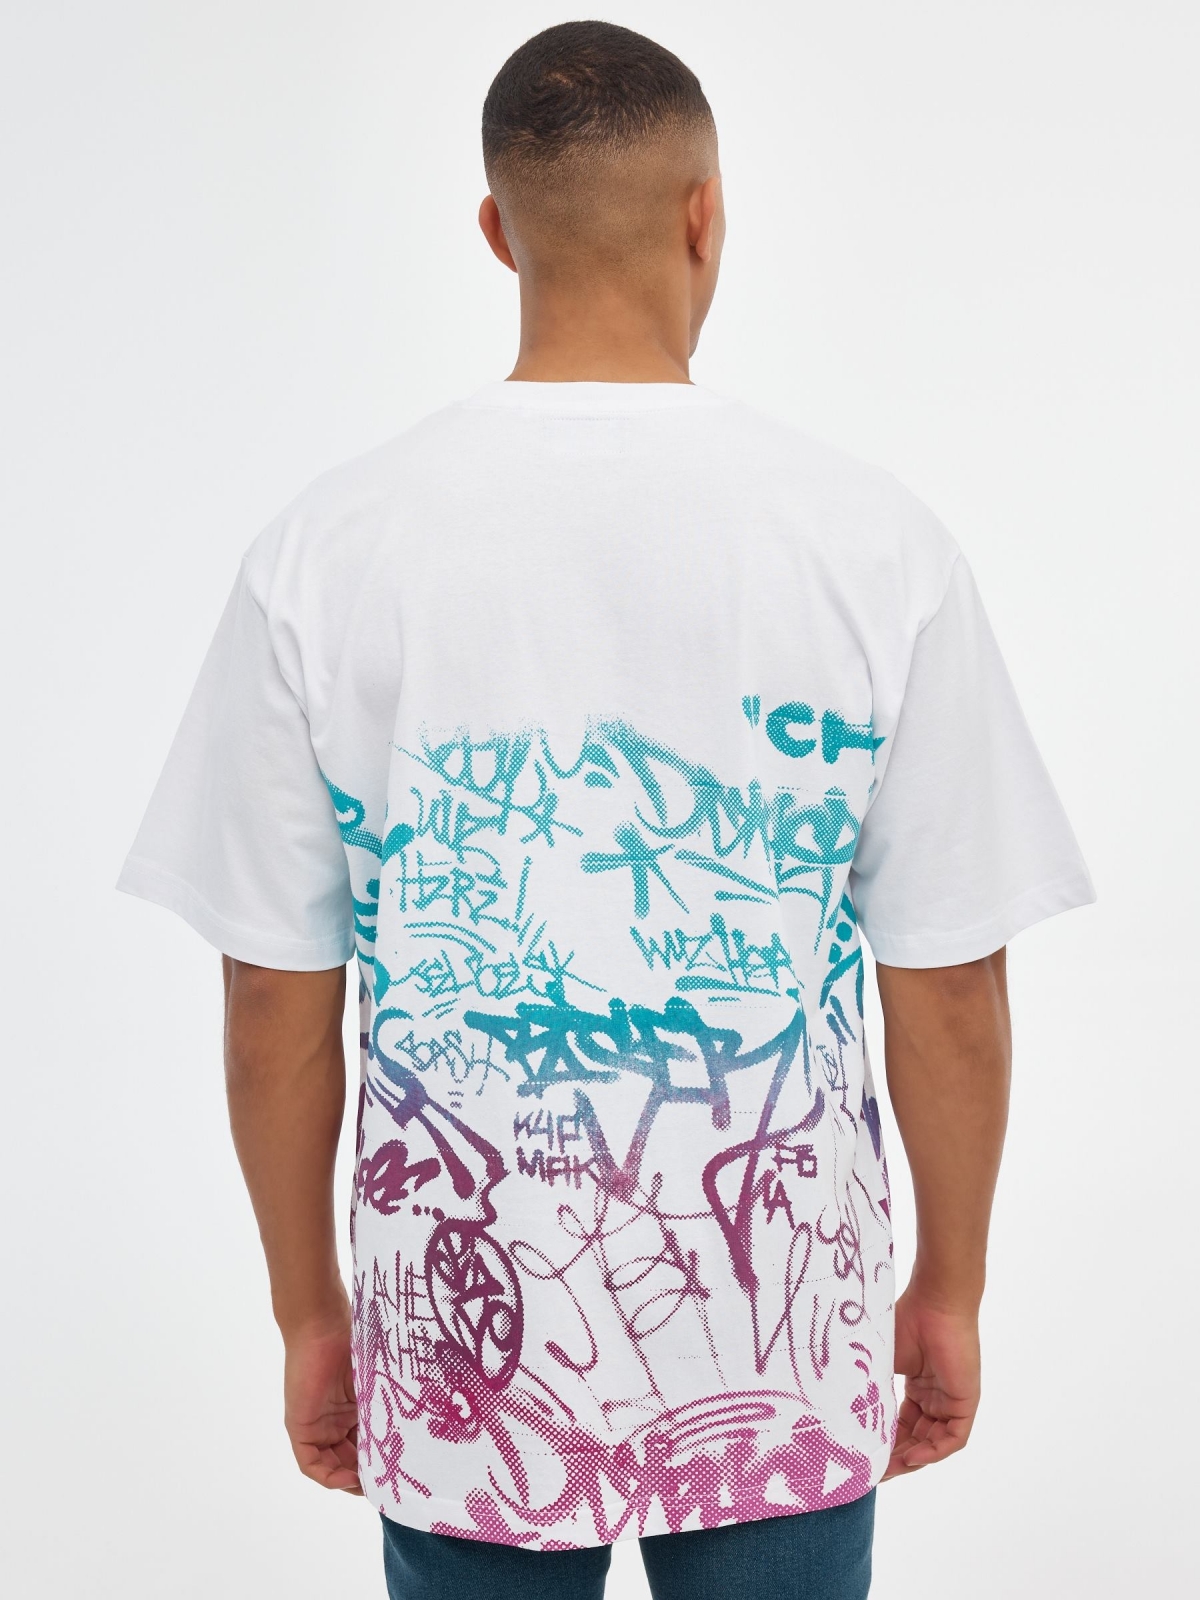 Men's graffiti t-shirt white middle back view